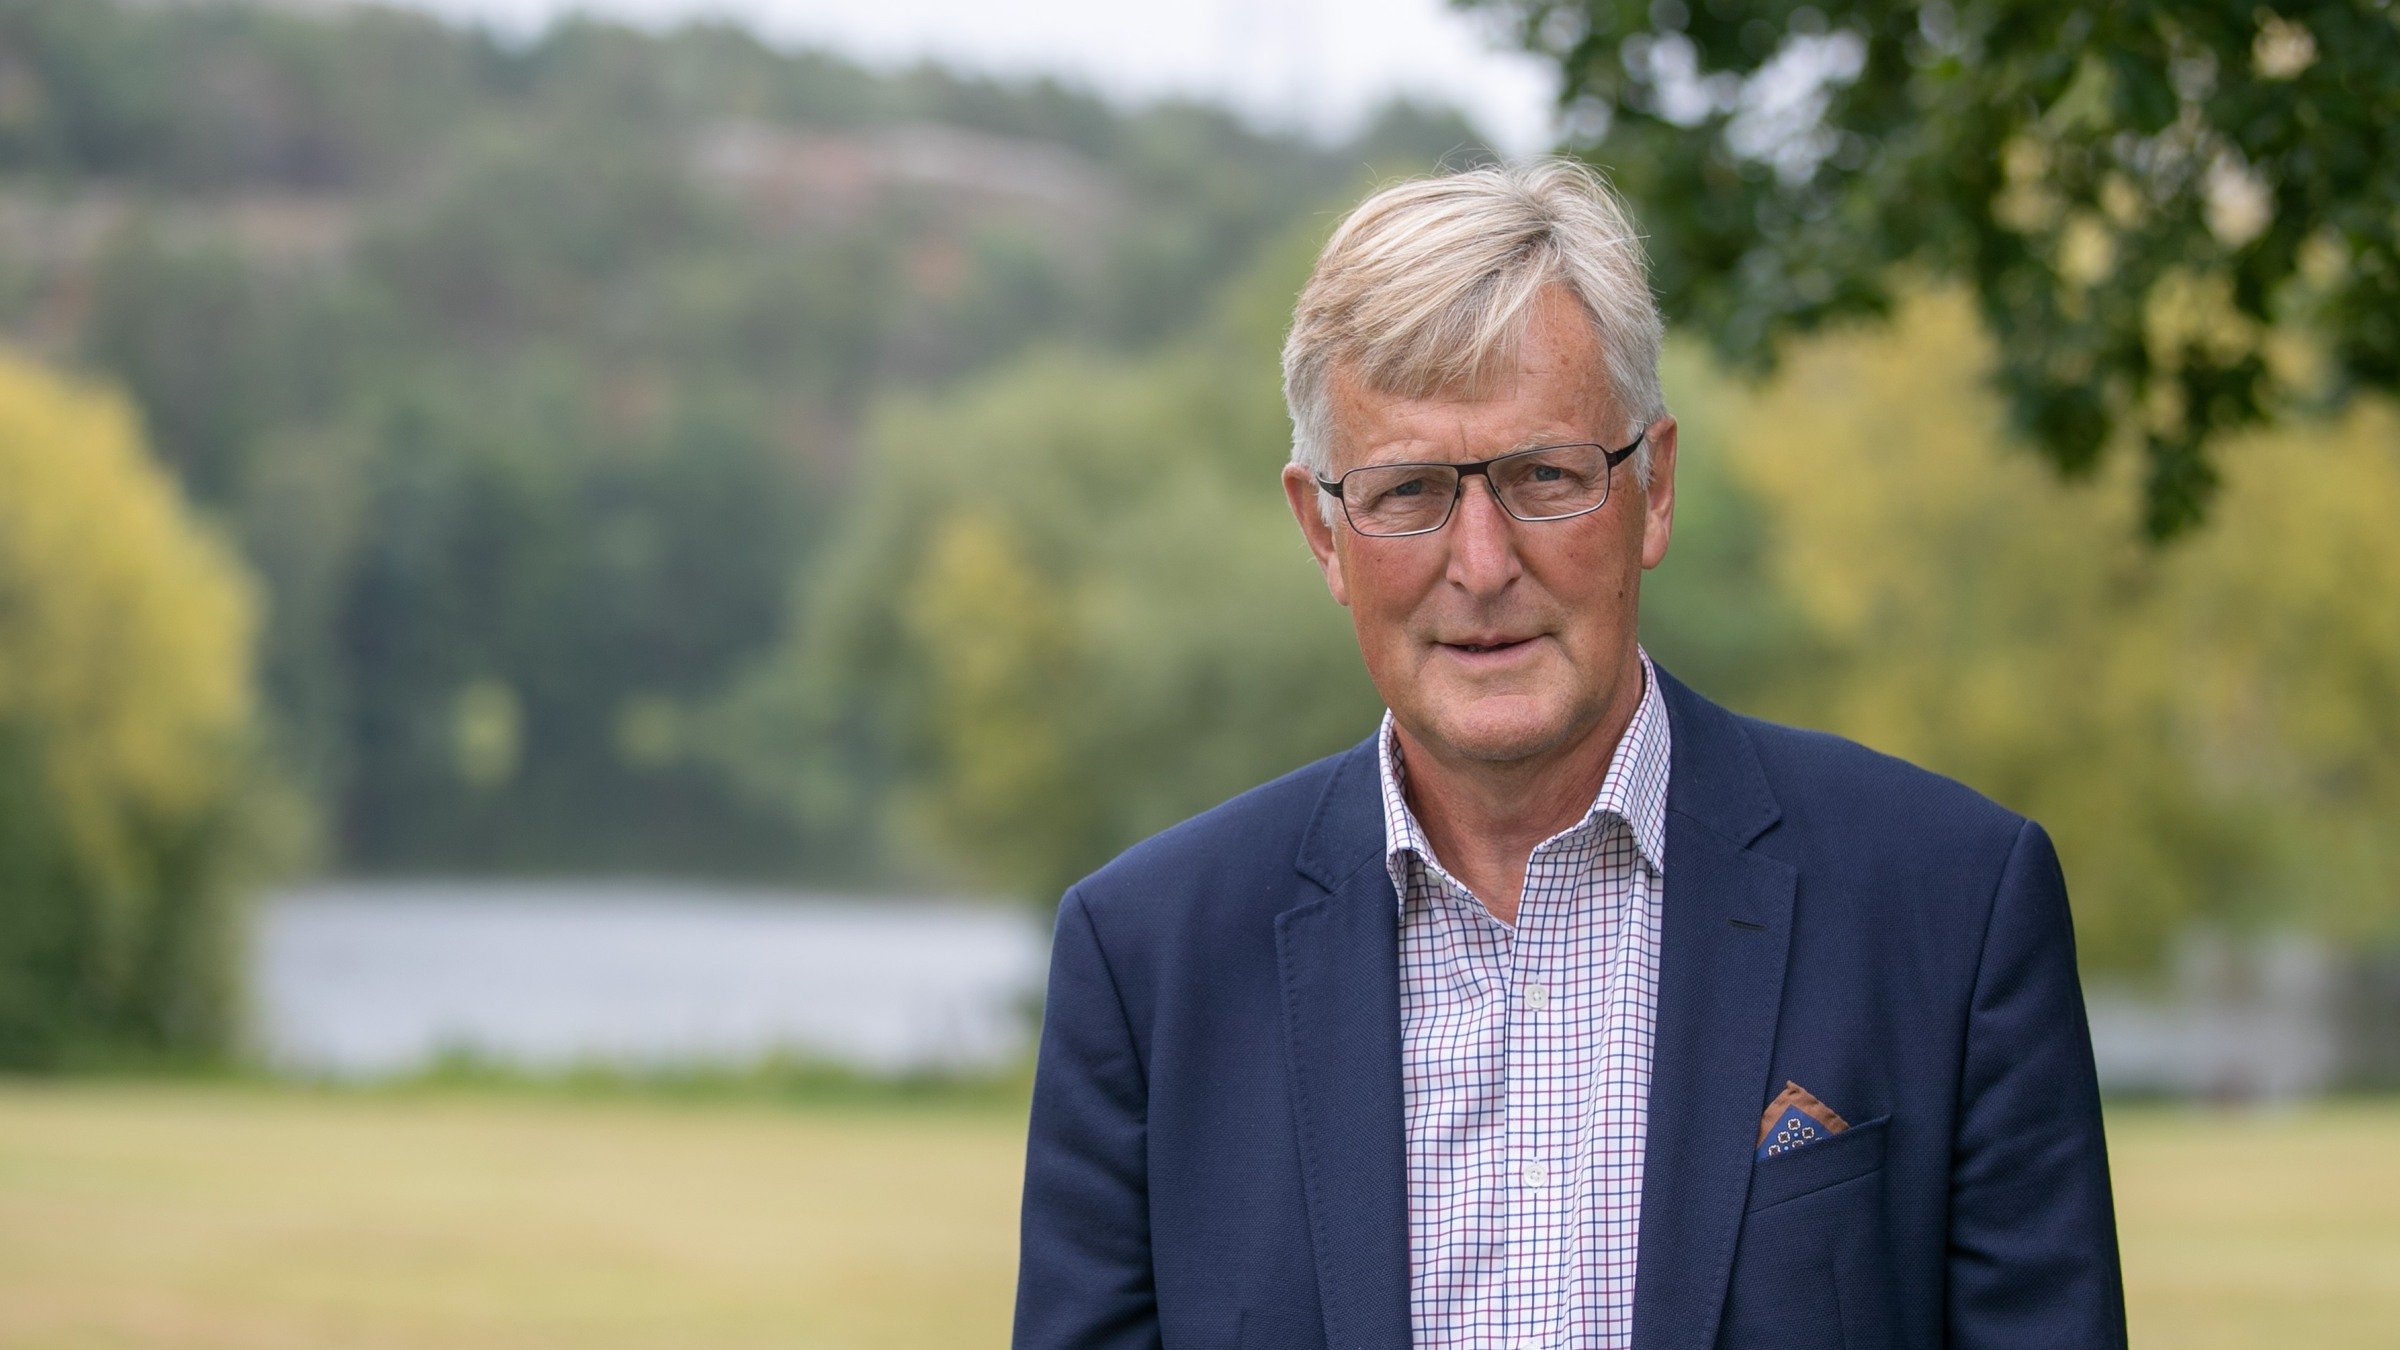 Jan Åke Jonsson Chairman of EasyMining in front of trees